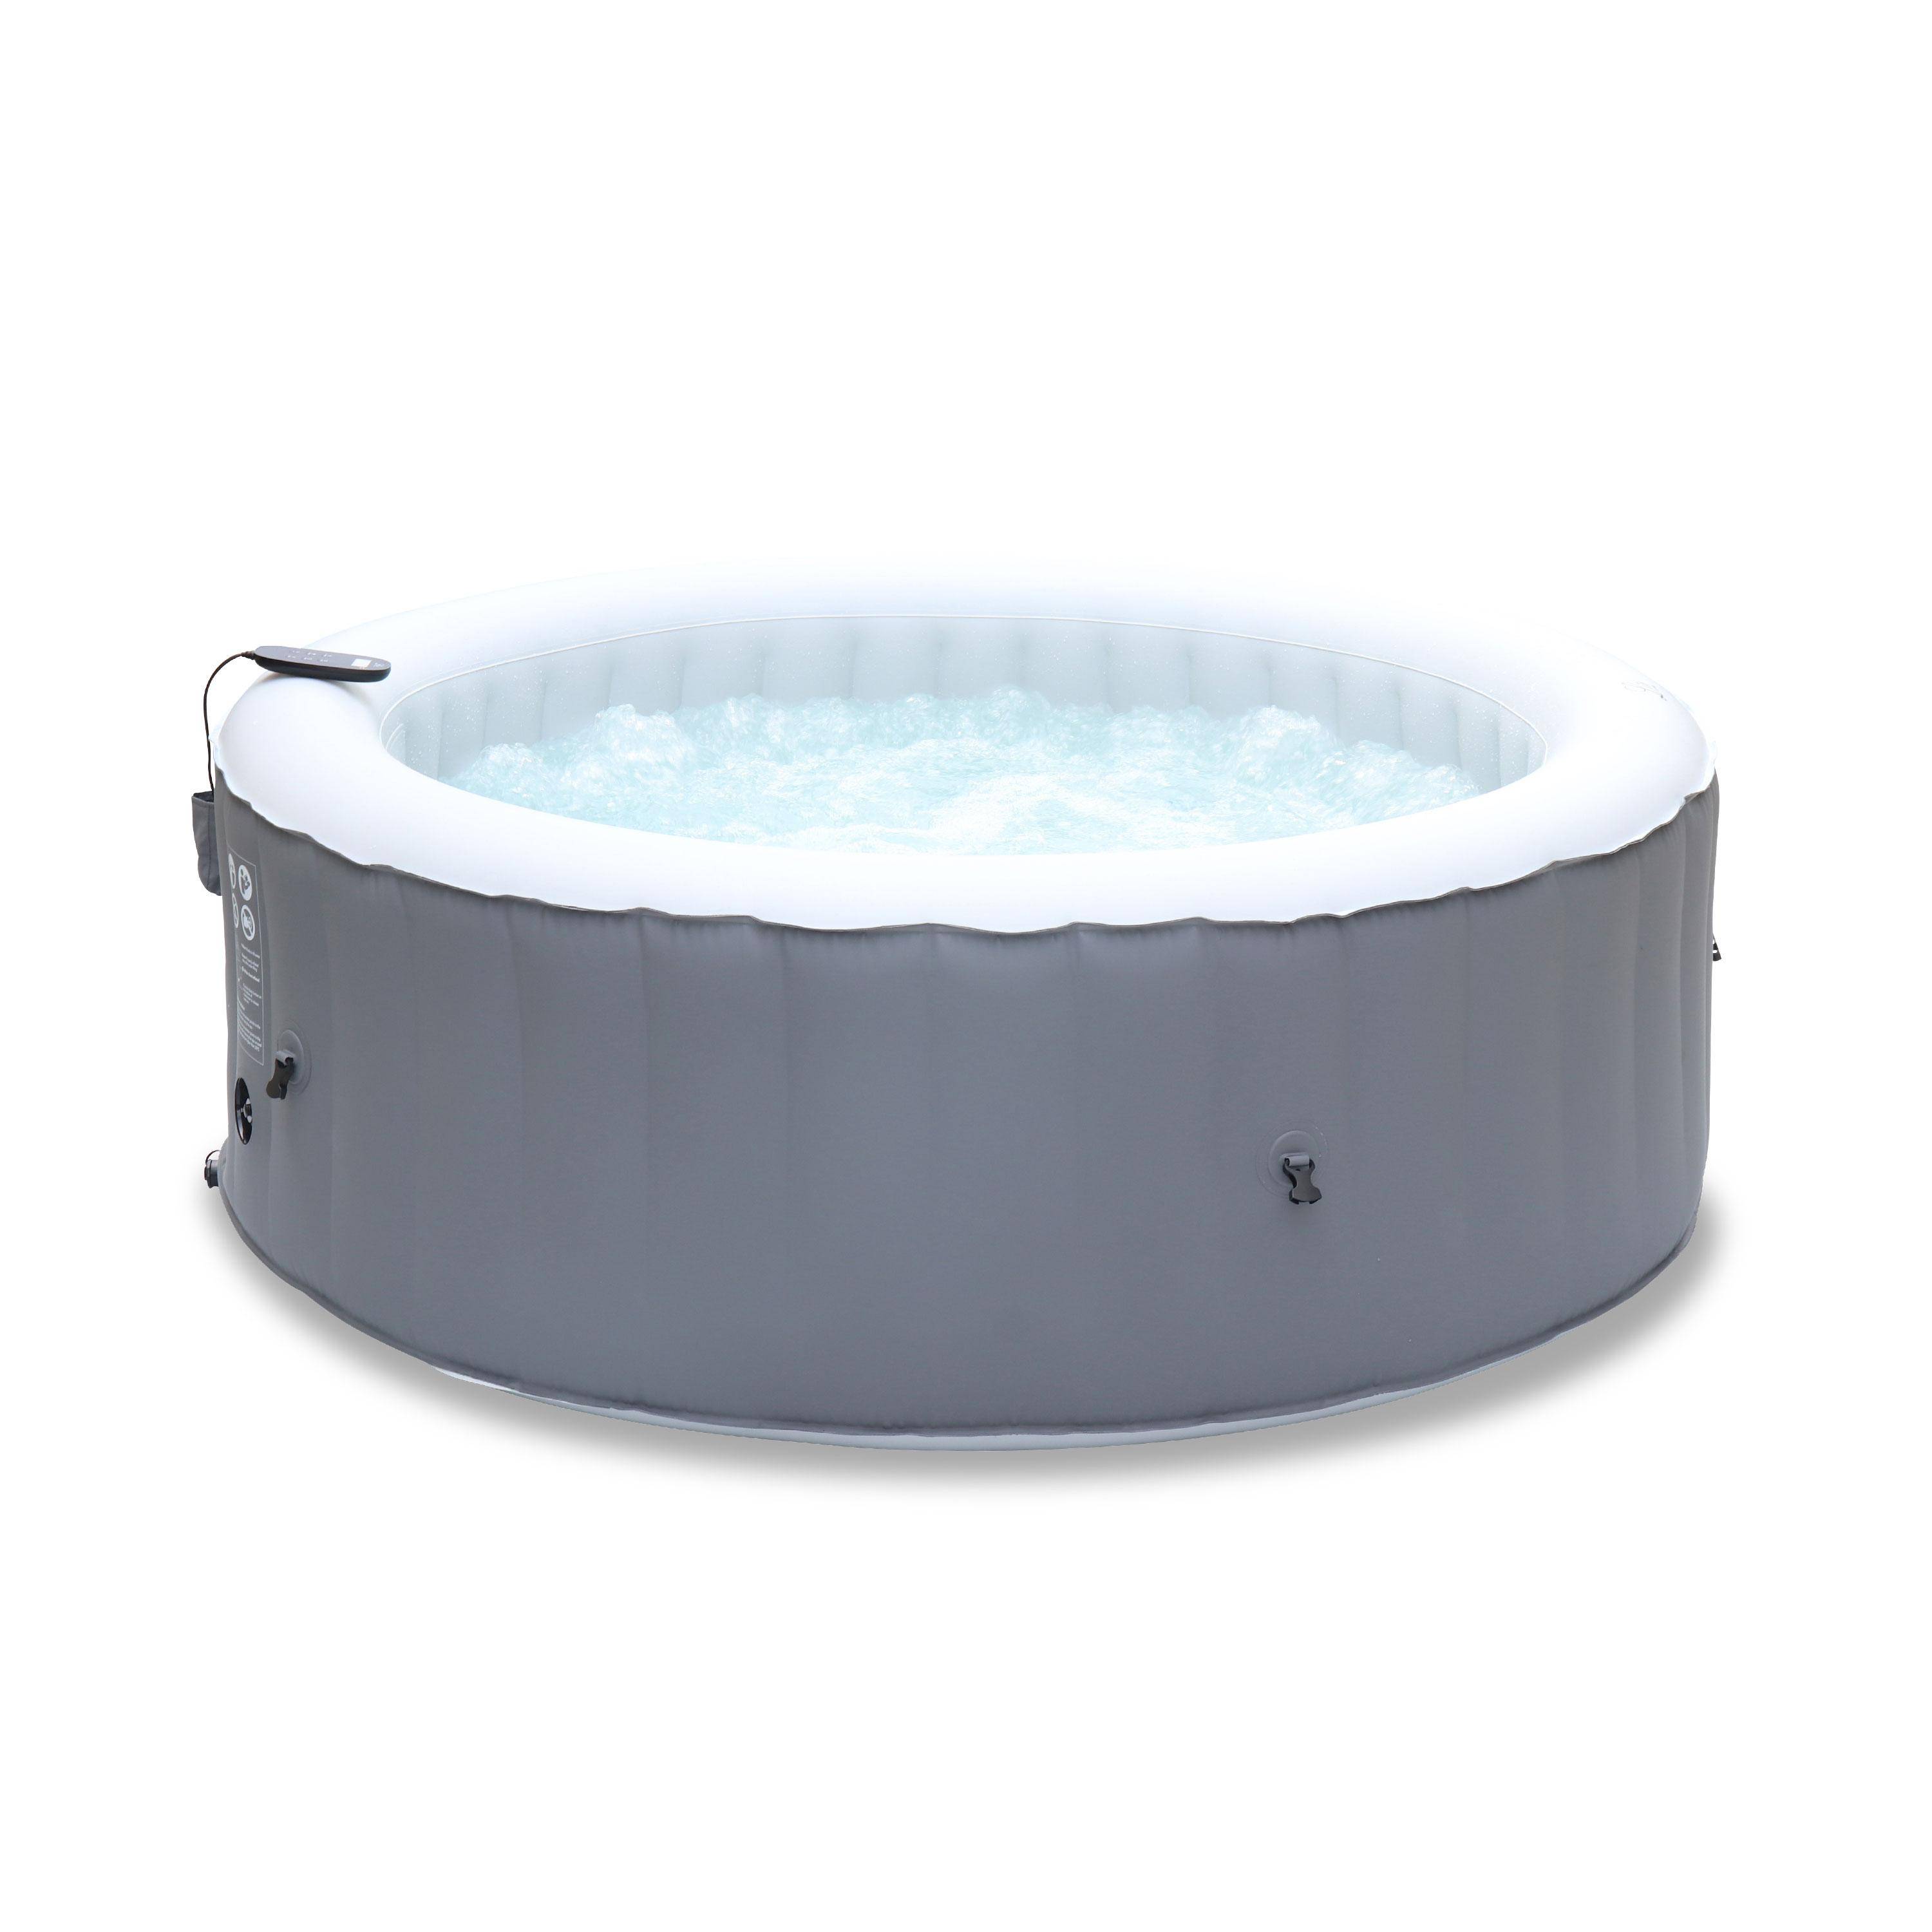  4-person round inflatable hot tub MSpa - Ø180cm round 4-person spa, PVC, pump, heater, filter, remote control - Kili 4 - Grey,sweeek,Photo1